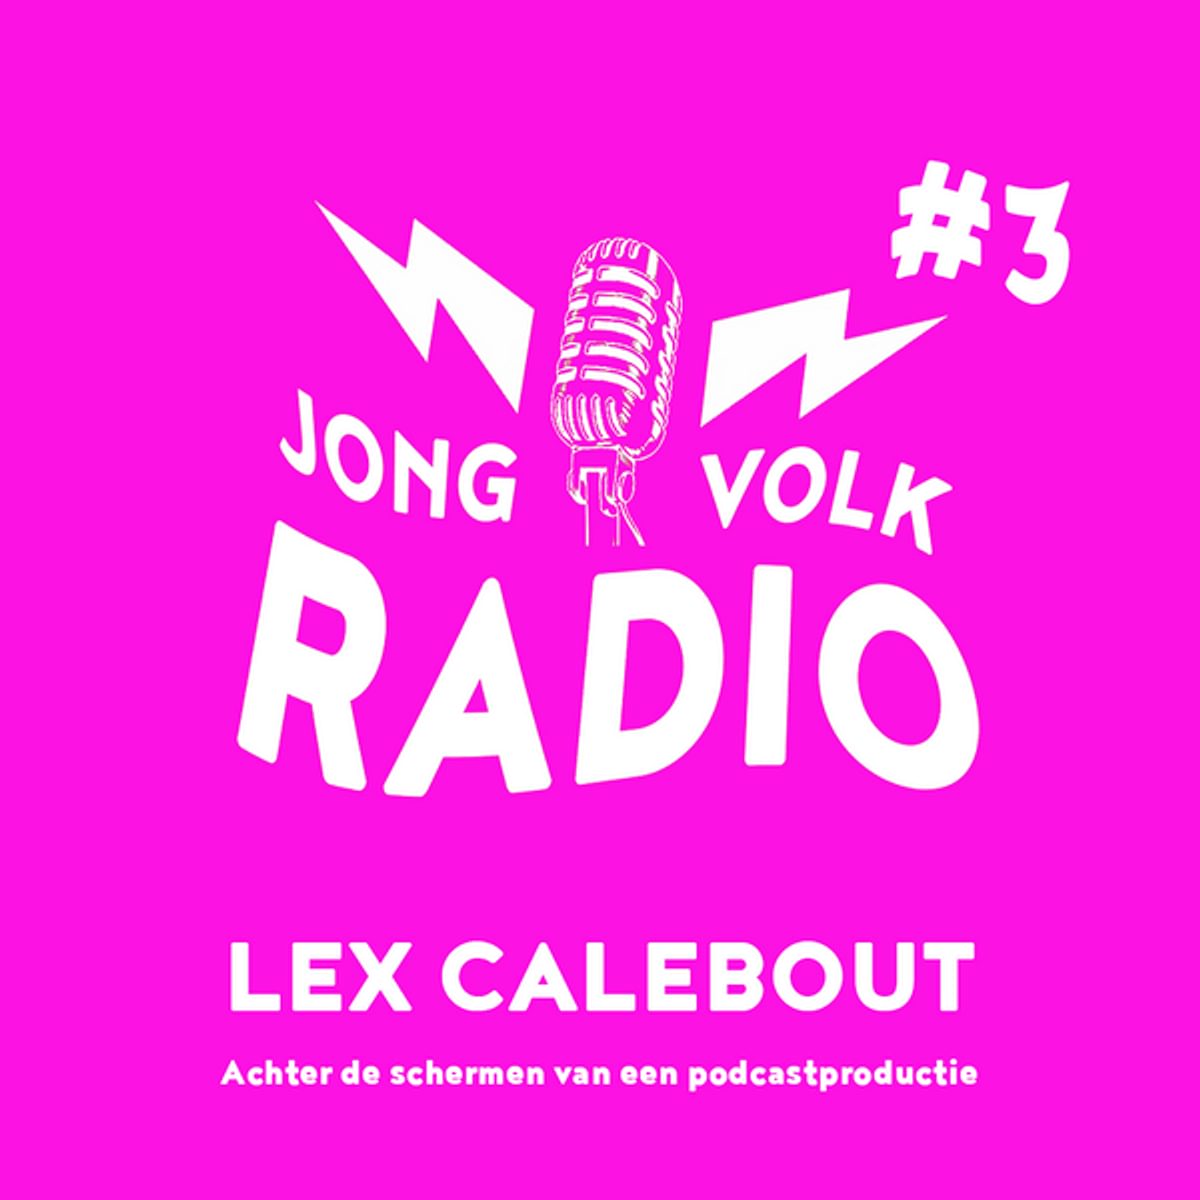 JONG VOLK RADIO #3 LEX CALEBOUT